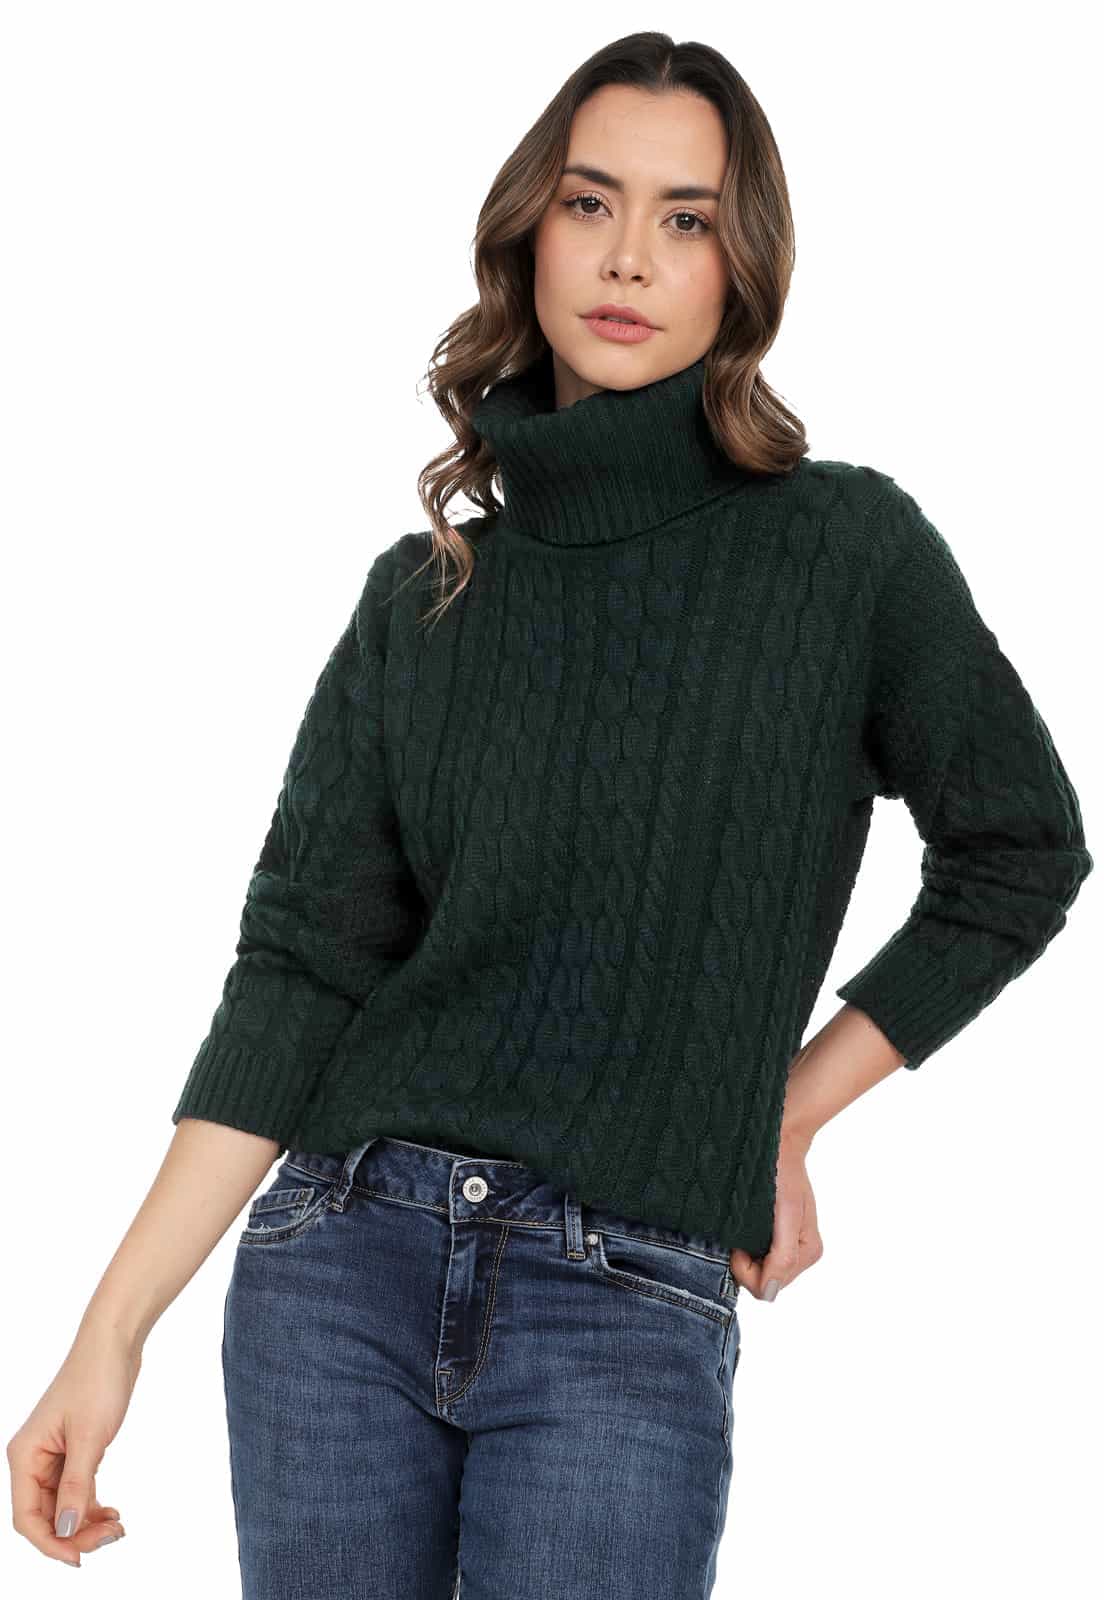 Saco para Mujer Trenza Completo Cuello Tortuga  - UMC512 - Giive Fábrica de sweaters para Mujer colombia